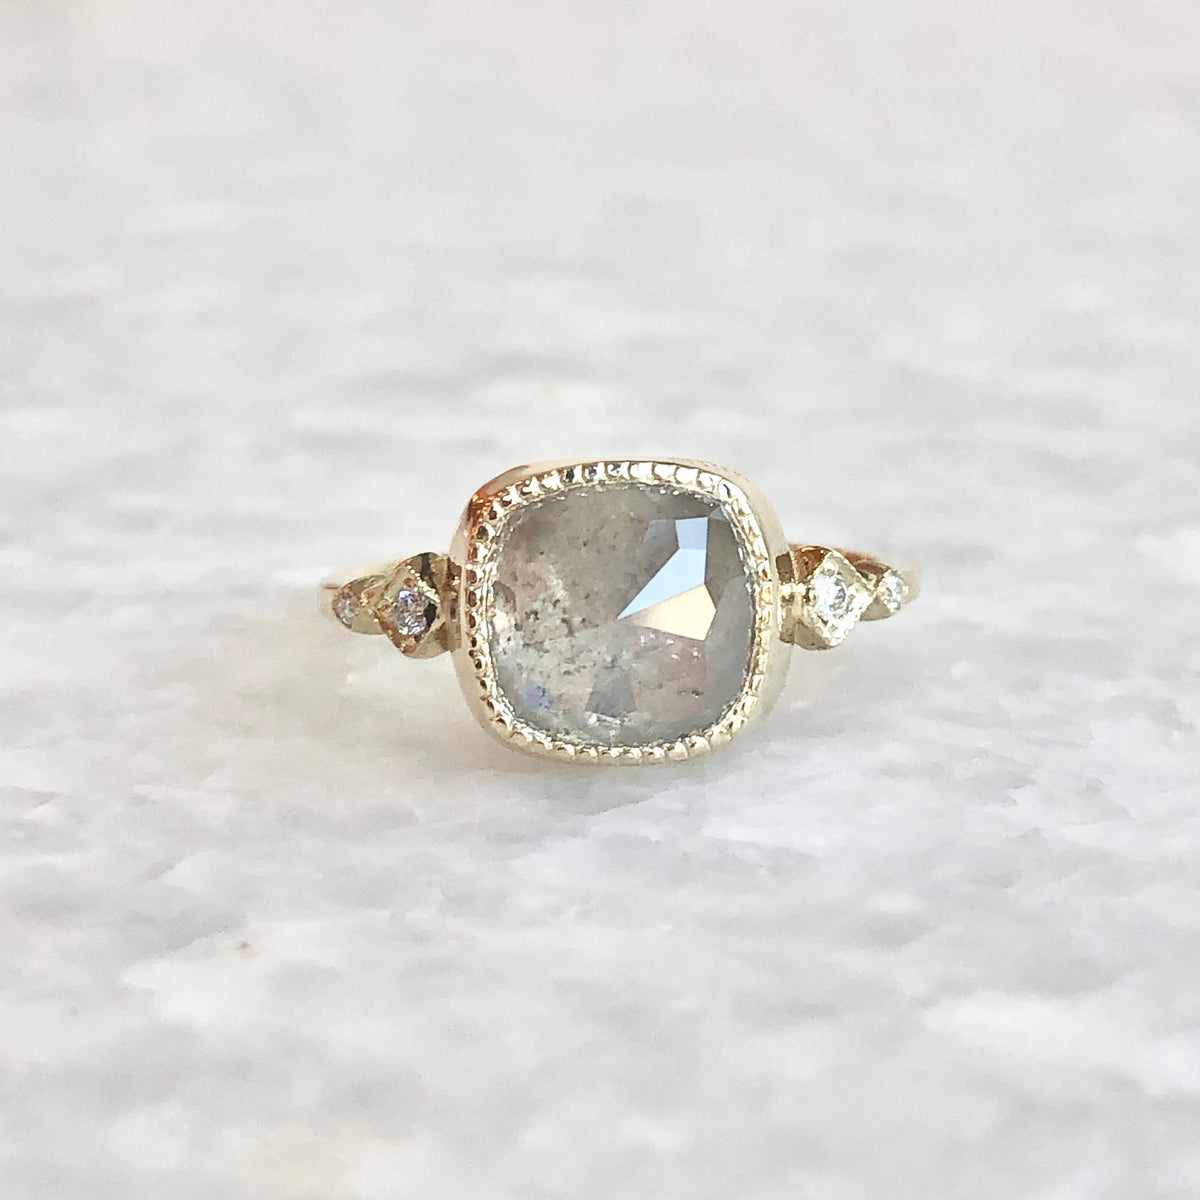 Gray Diamond Slice Ring